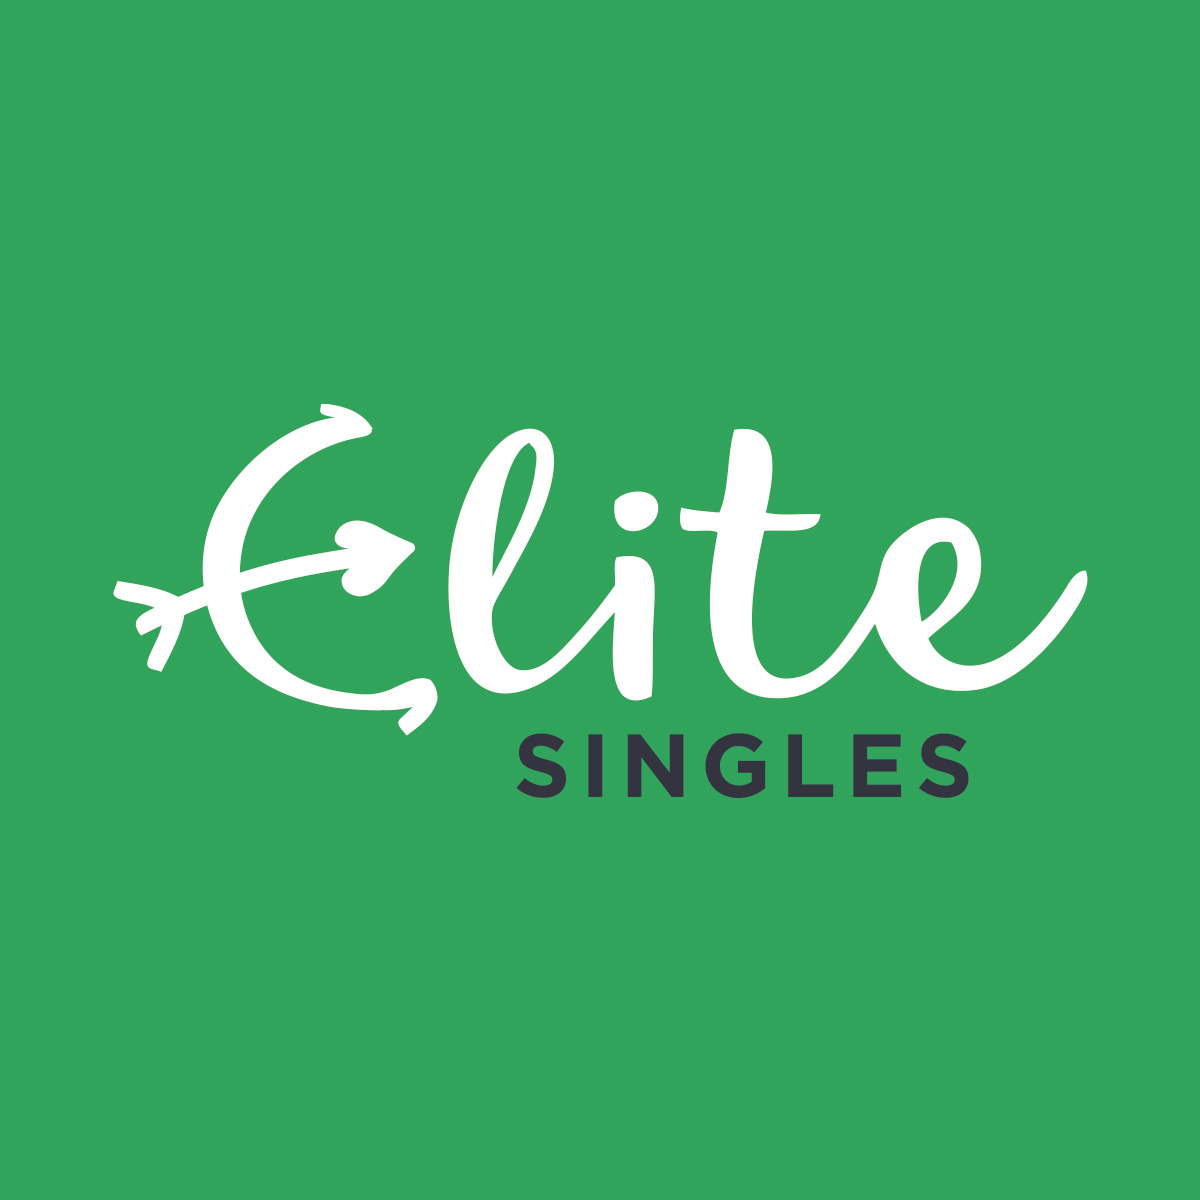 Elite dating uk in Zhengzhou